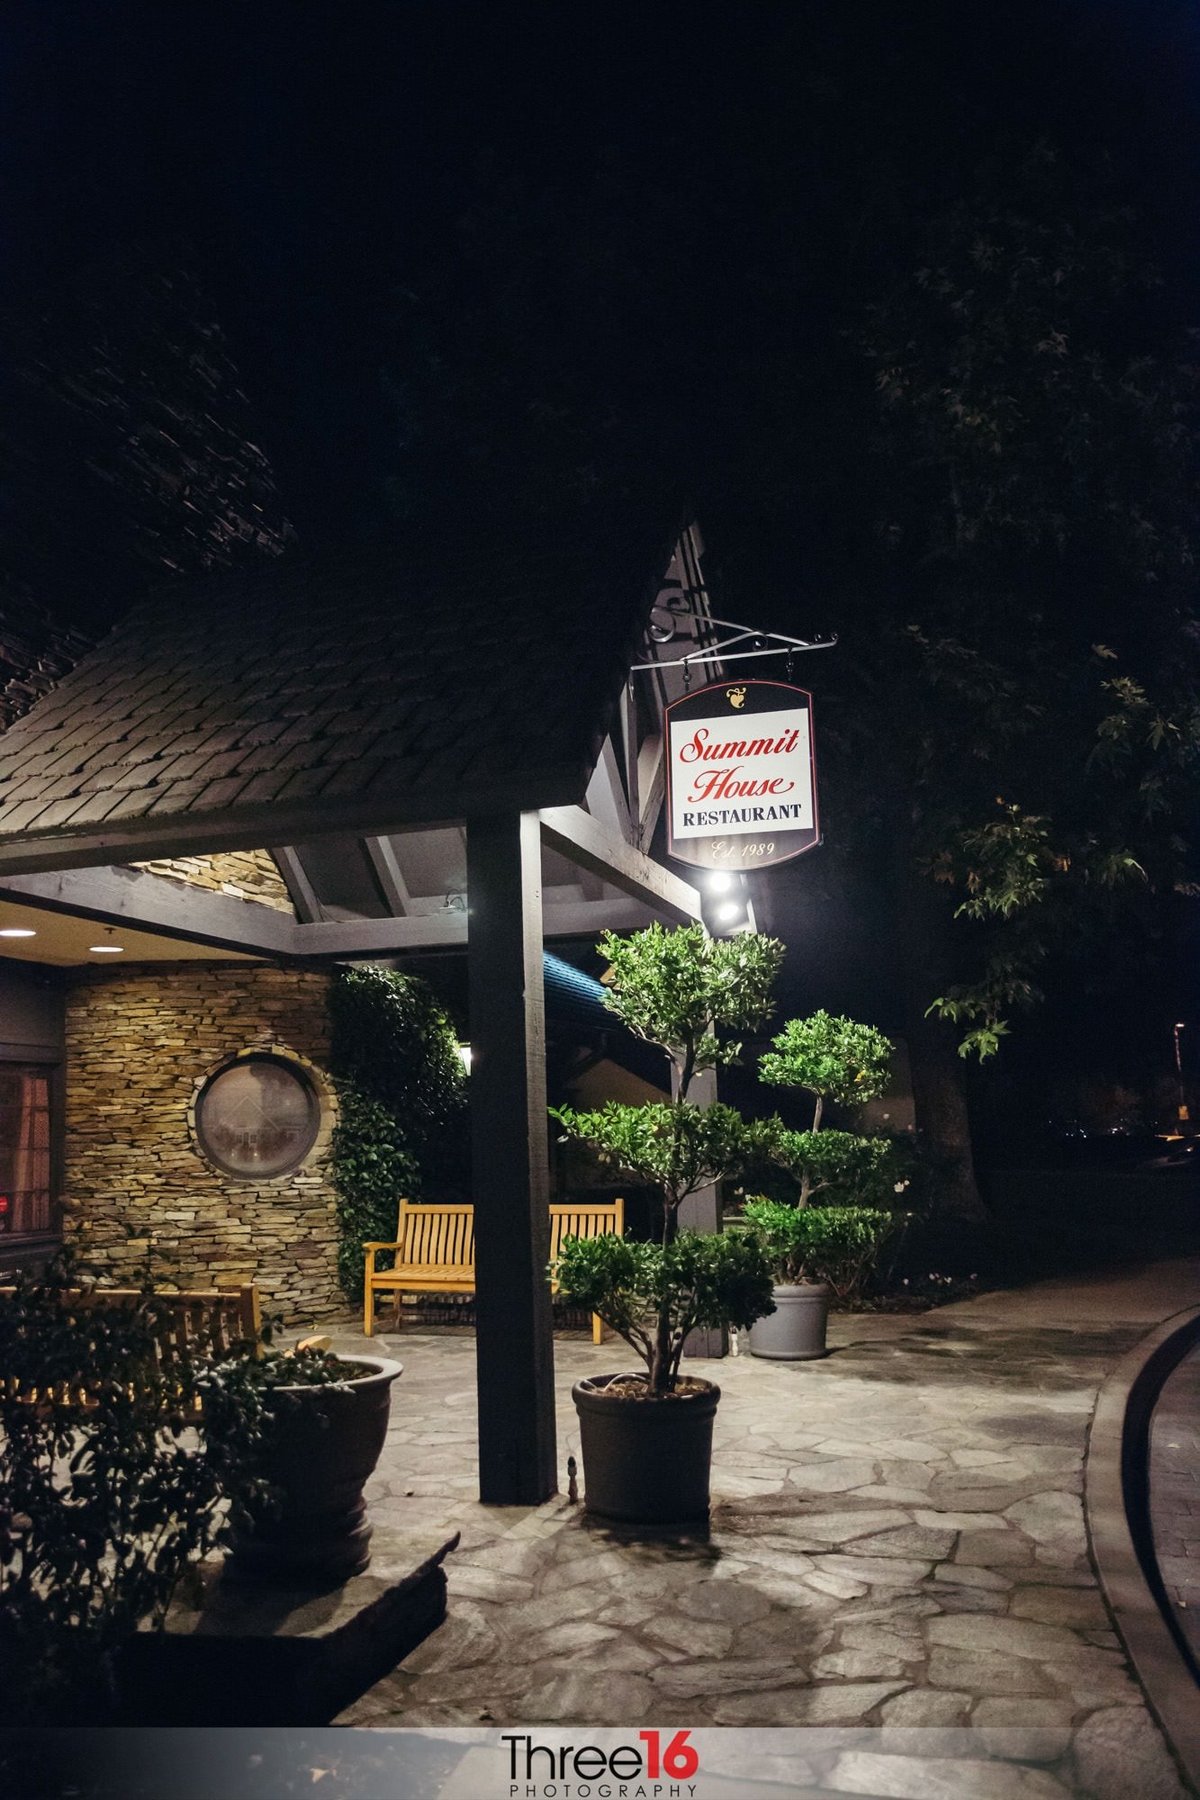 Night shot of the Summit House Restaurant